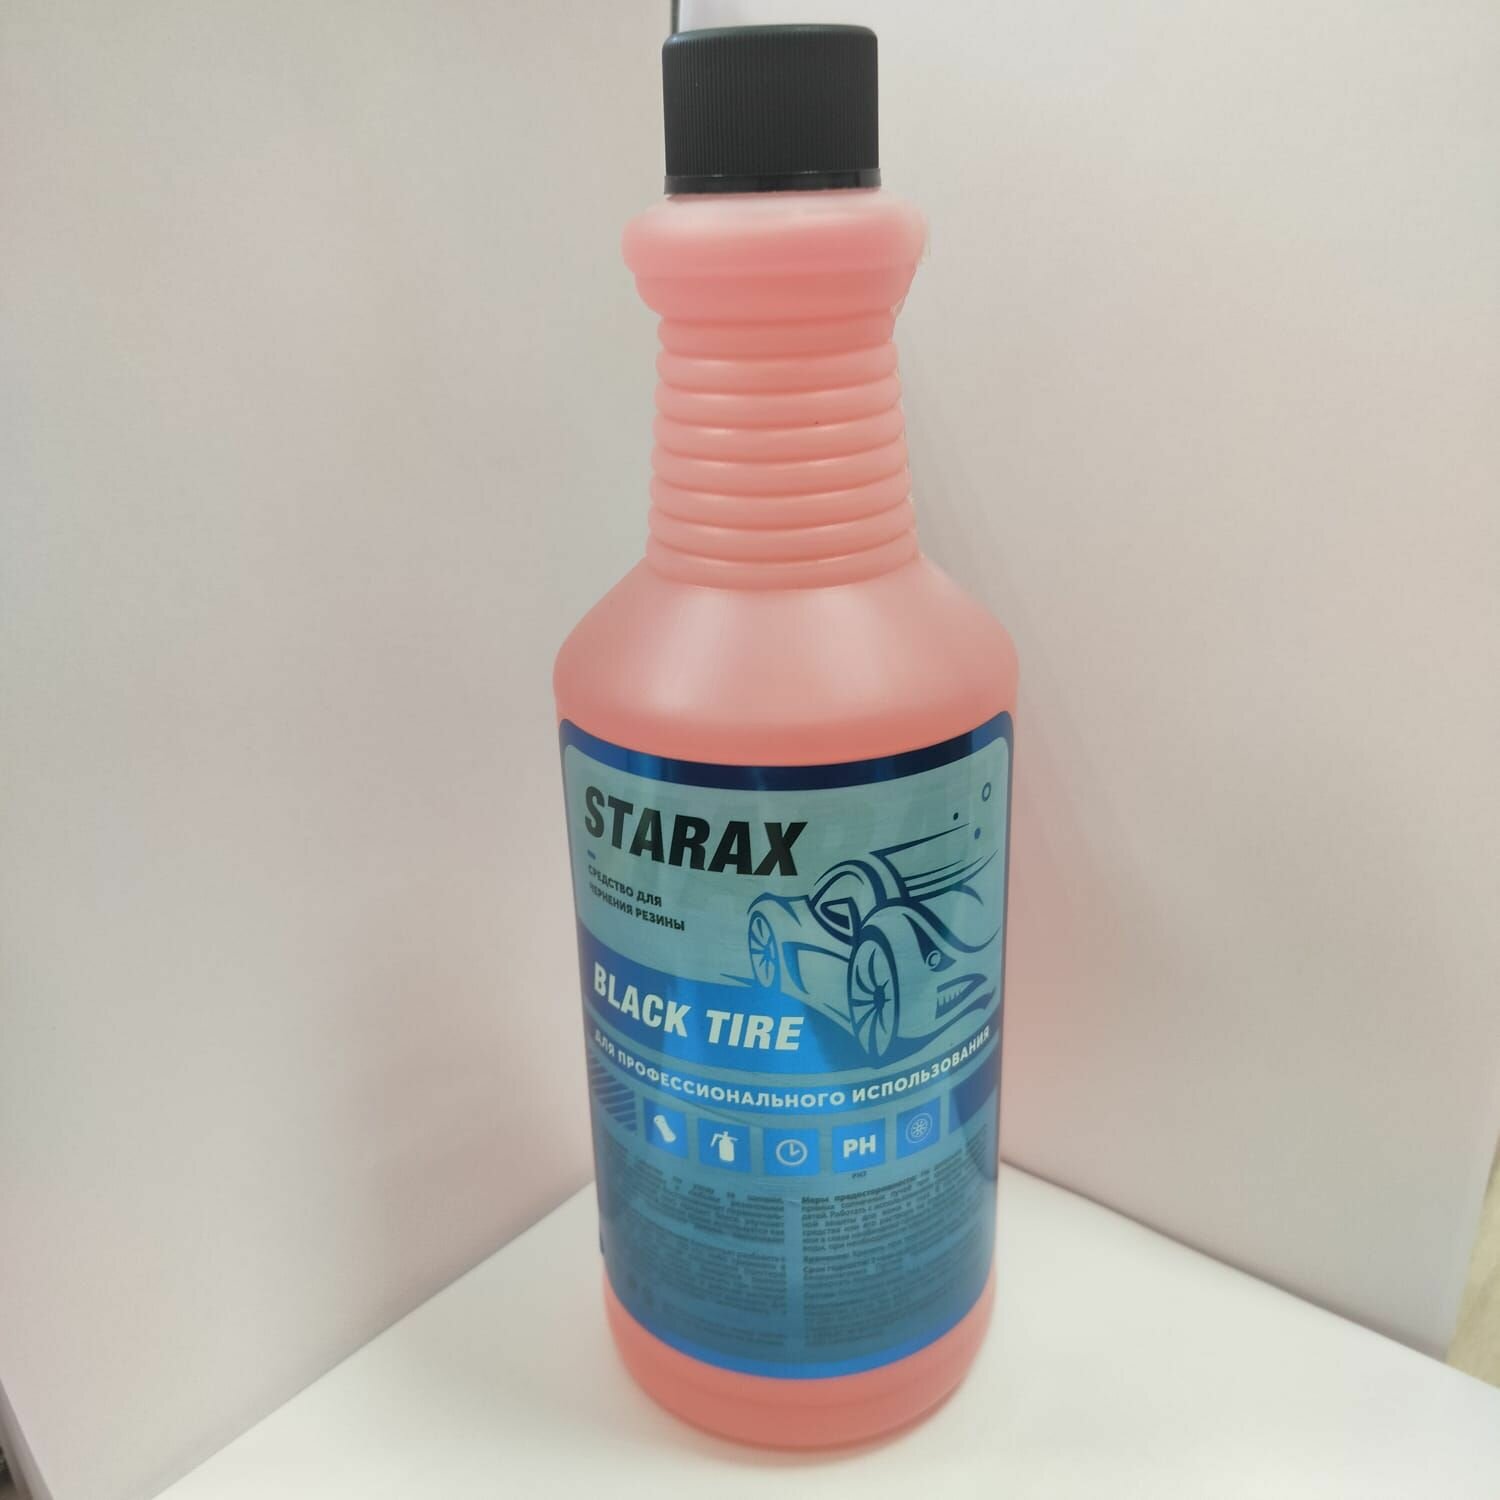 STARAX Средство для чернения резины автоBLACK TIRE 1Л